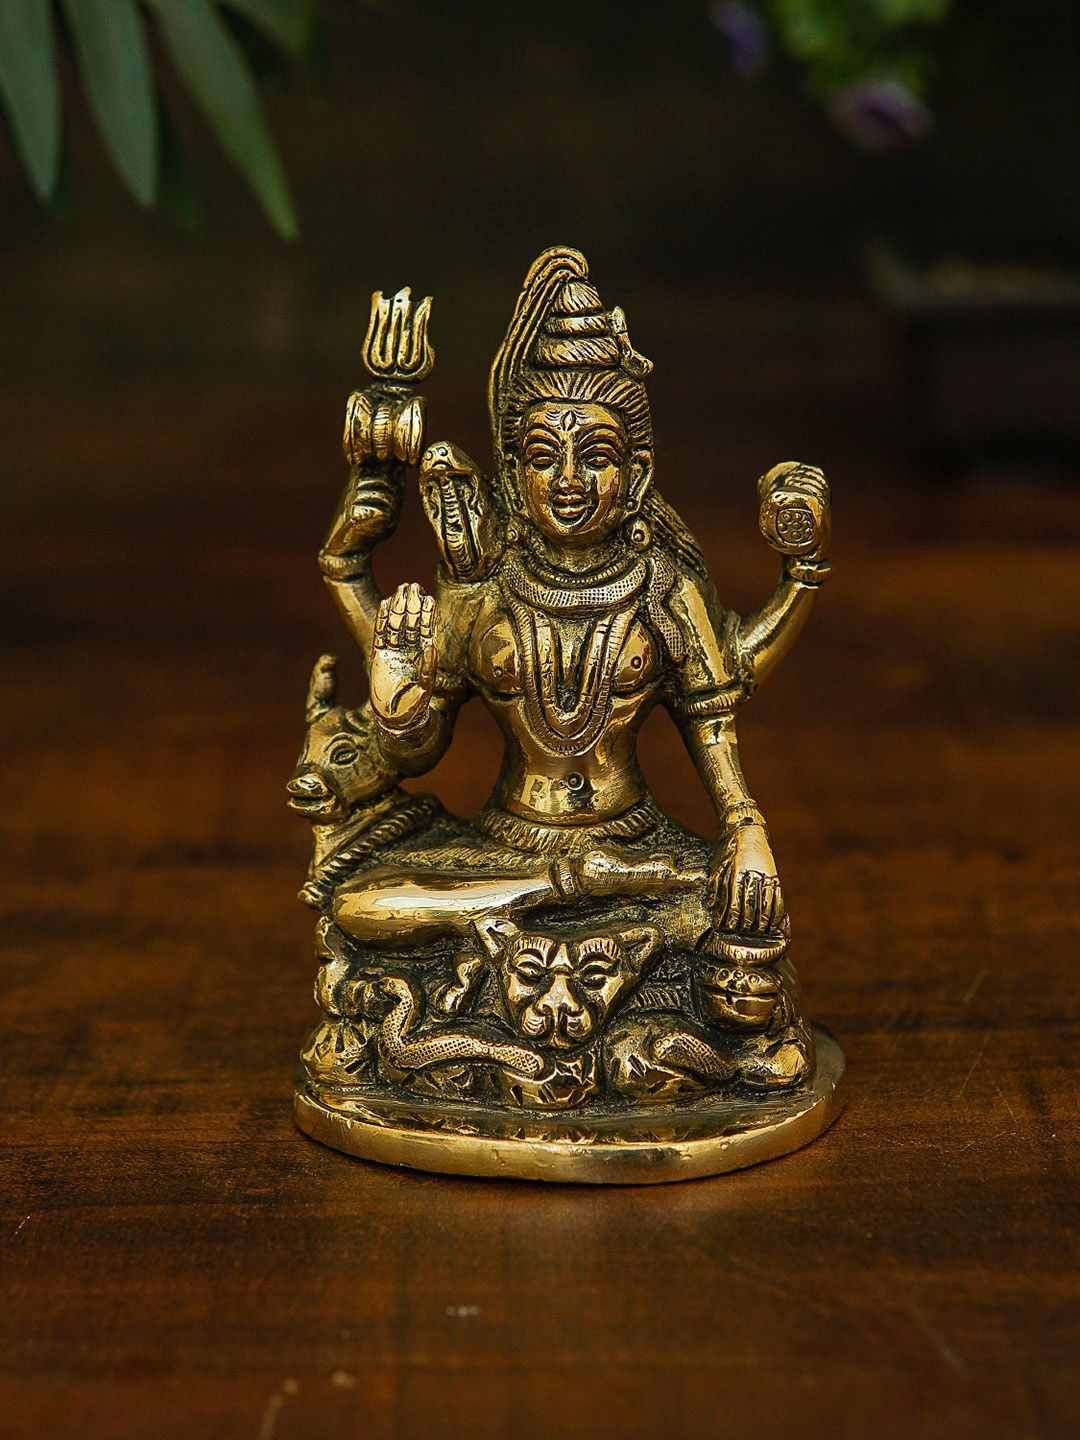 StatueStudio Gold-Toned Shiva Idol Showpiece Price in India